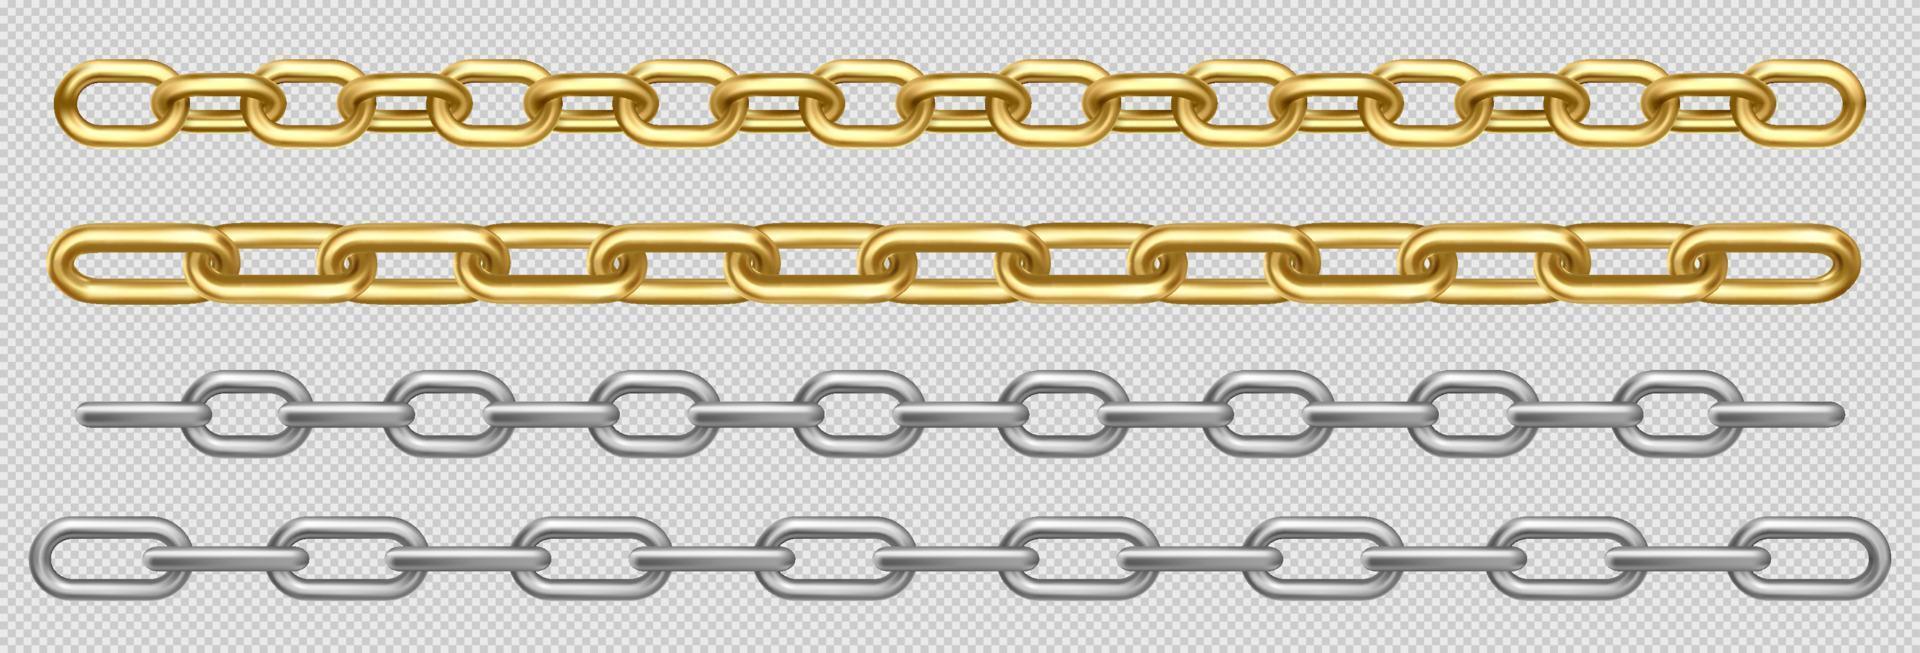 Metal chain of silver, steel or golden links set vector